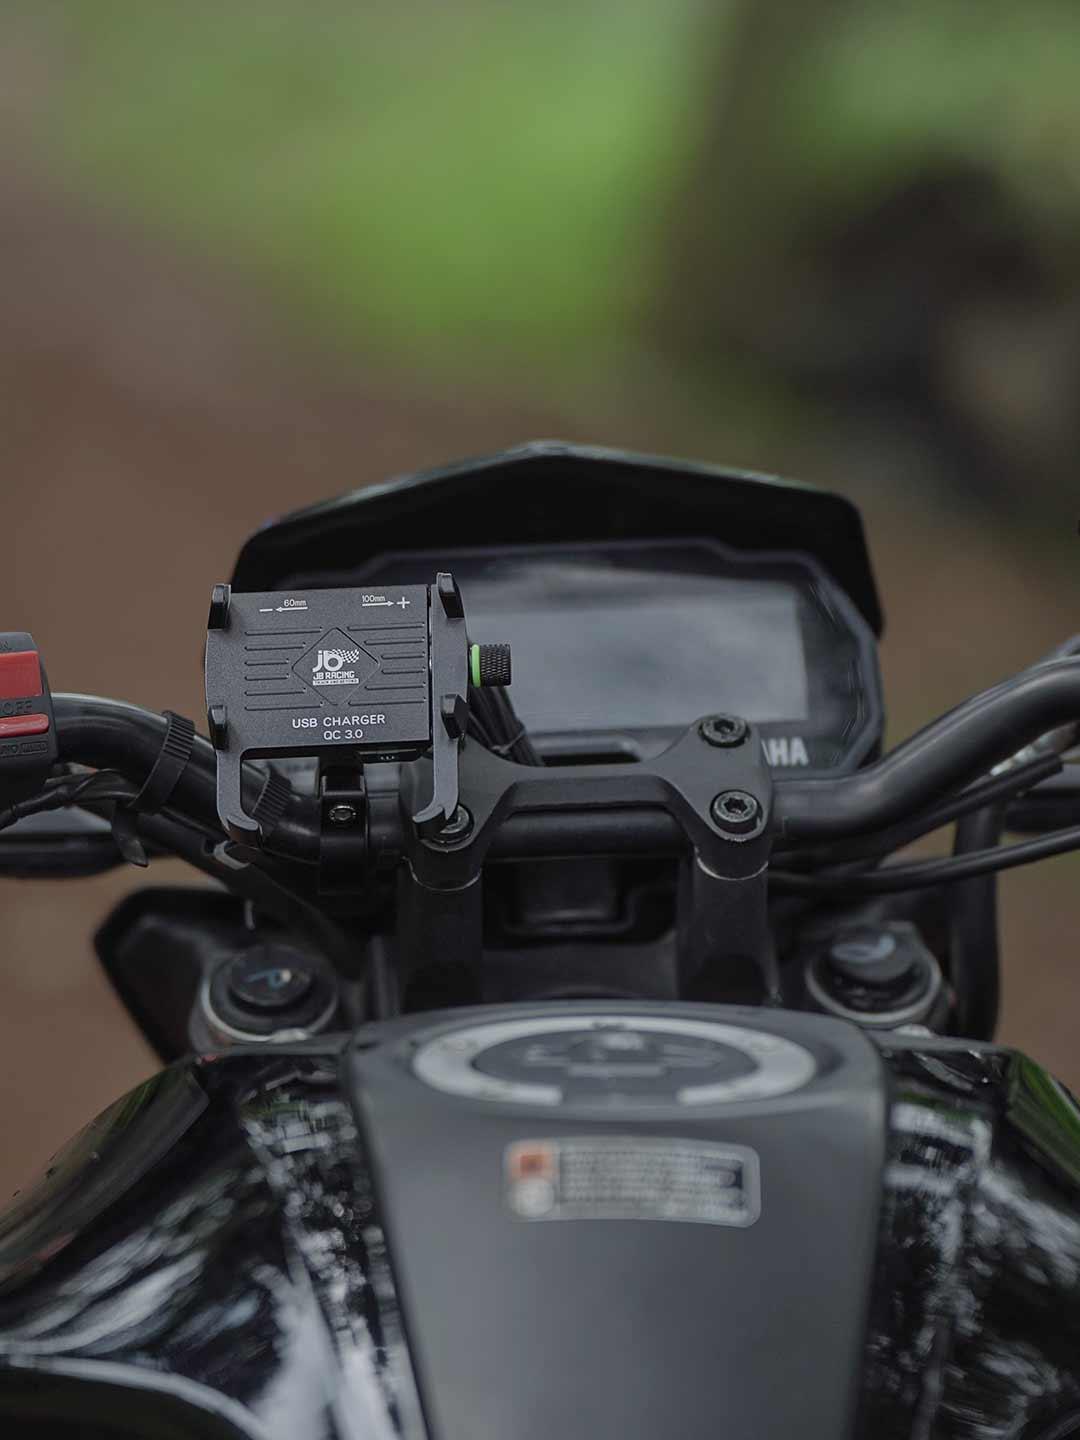 JB Racing M6 S Mobile Holder With USB Charger - Moto Modz